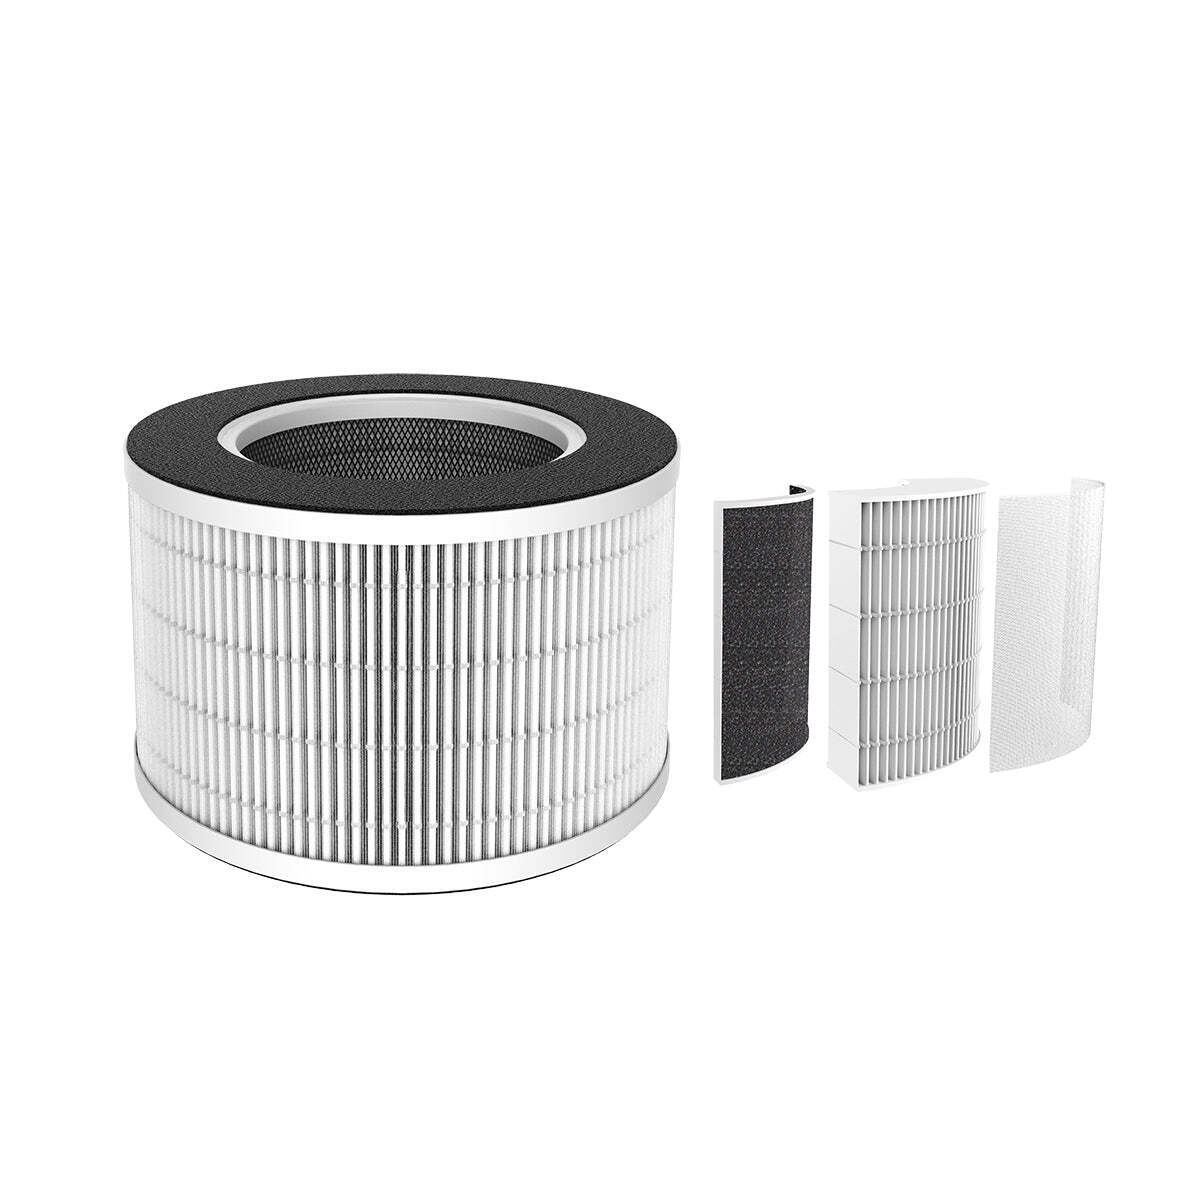 Air Purifier HEPA Filter (16.2cm x 12.6cm) Replacement Part - 0